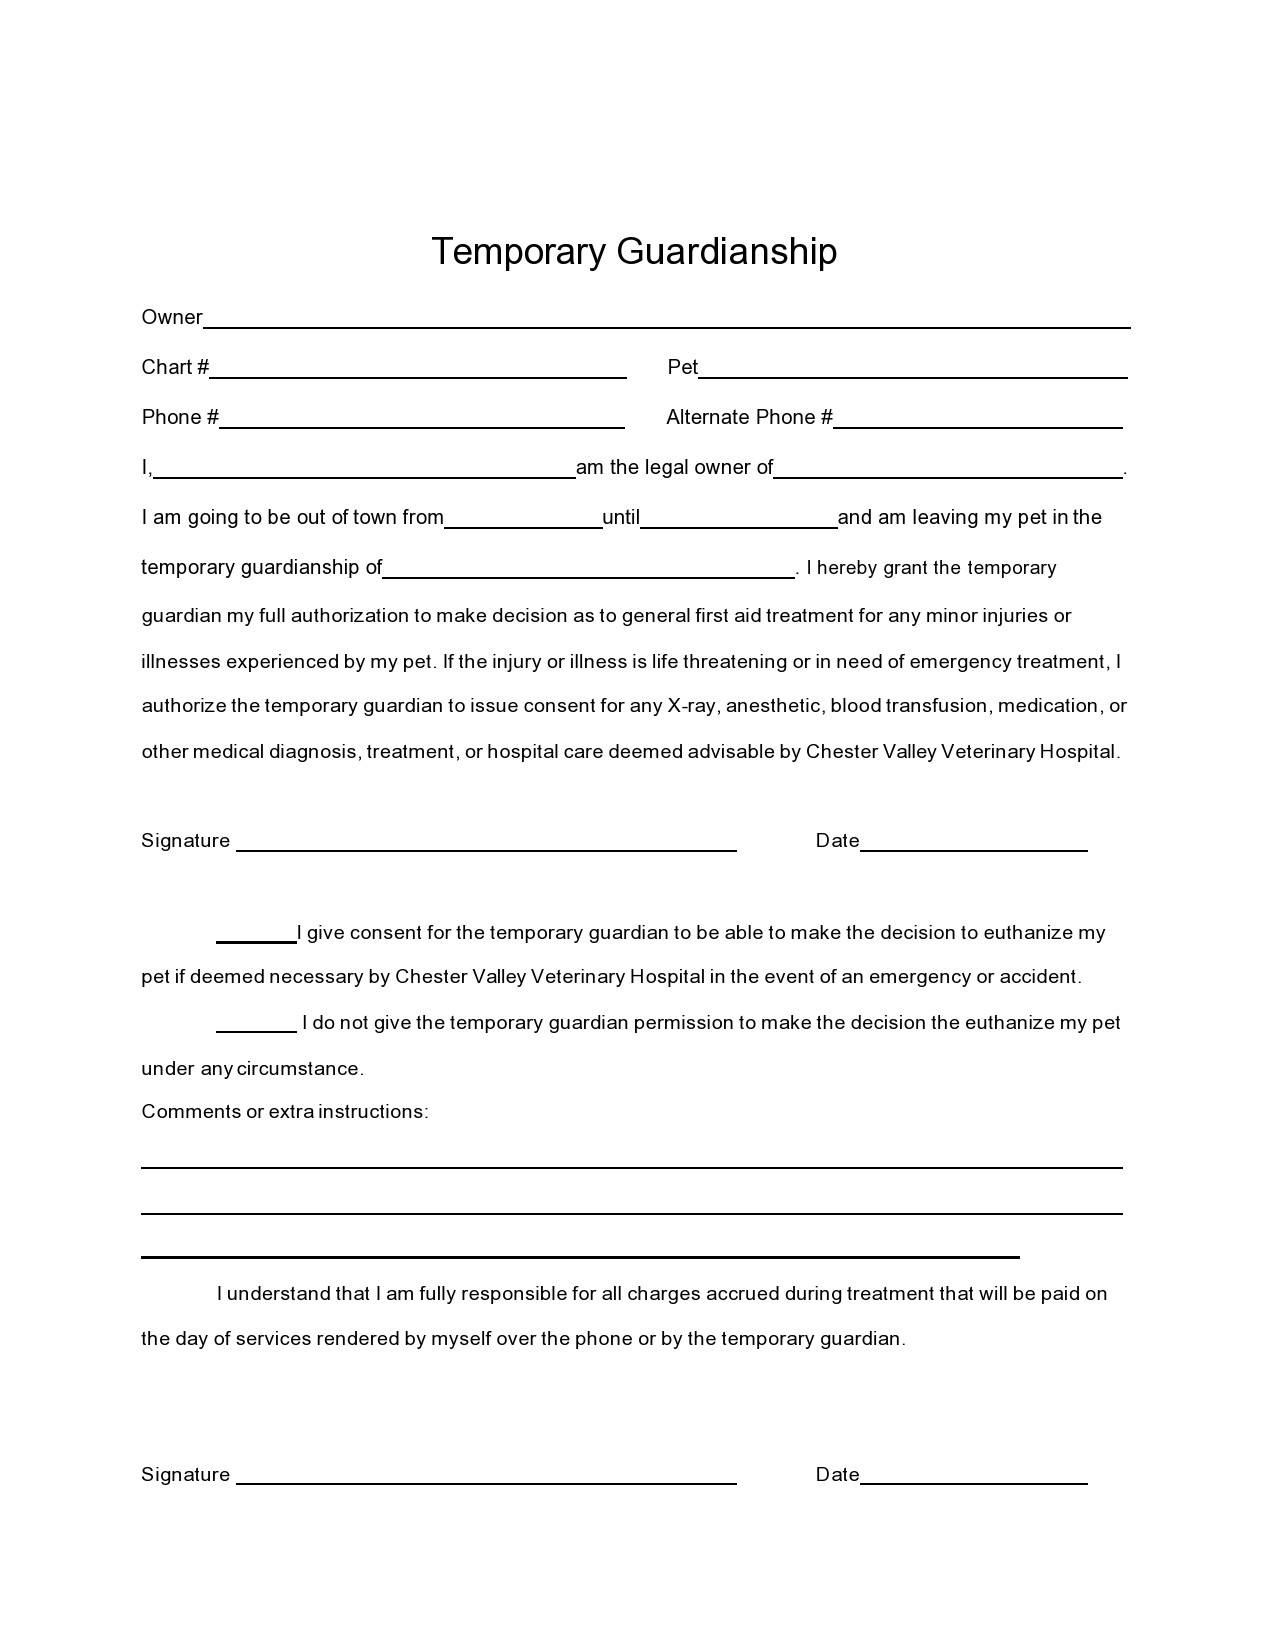 Free temporary guardianship form 23